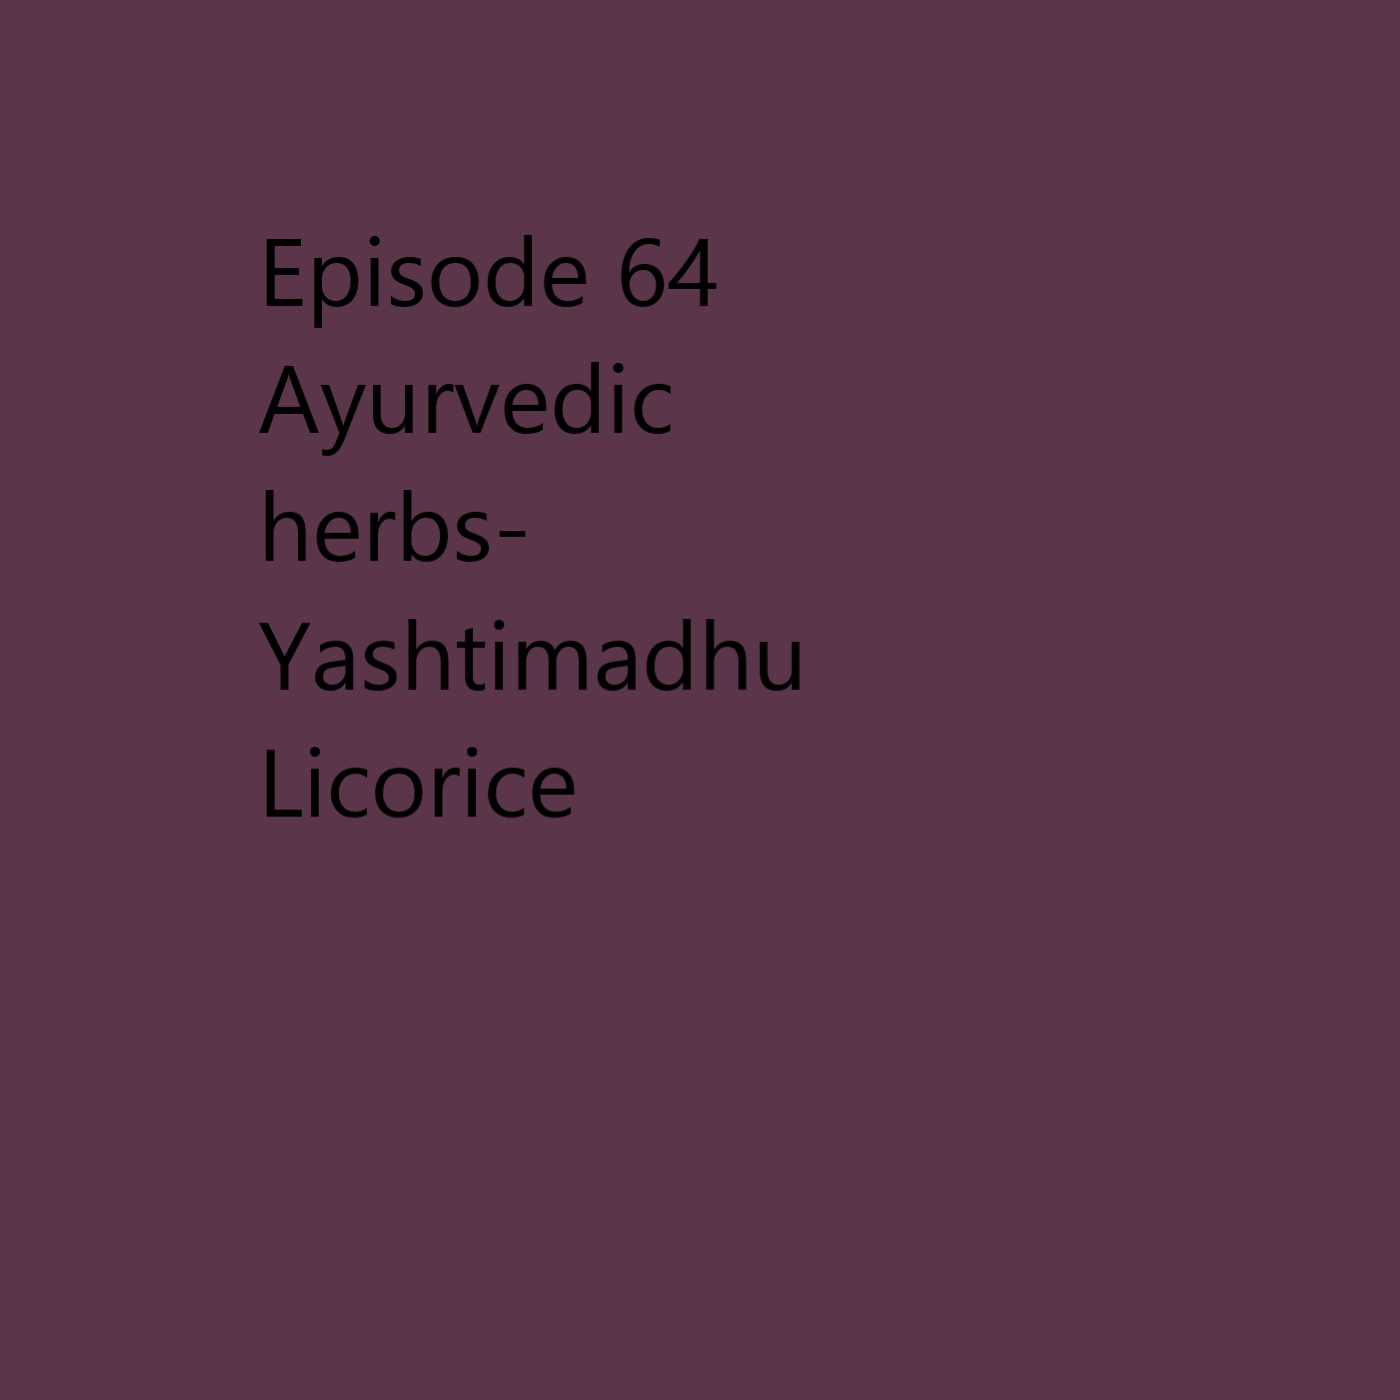 Episode 64 Licorice